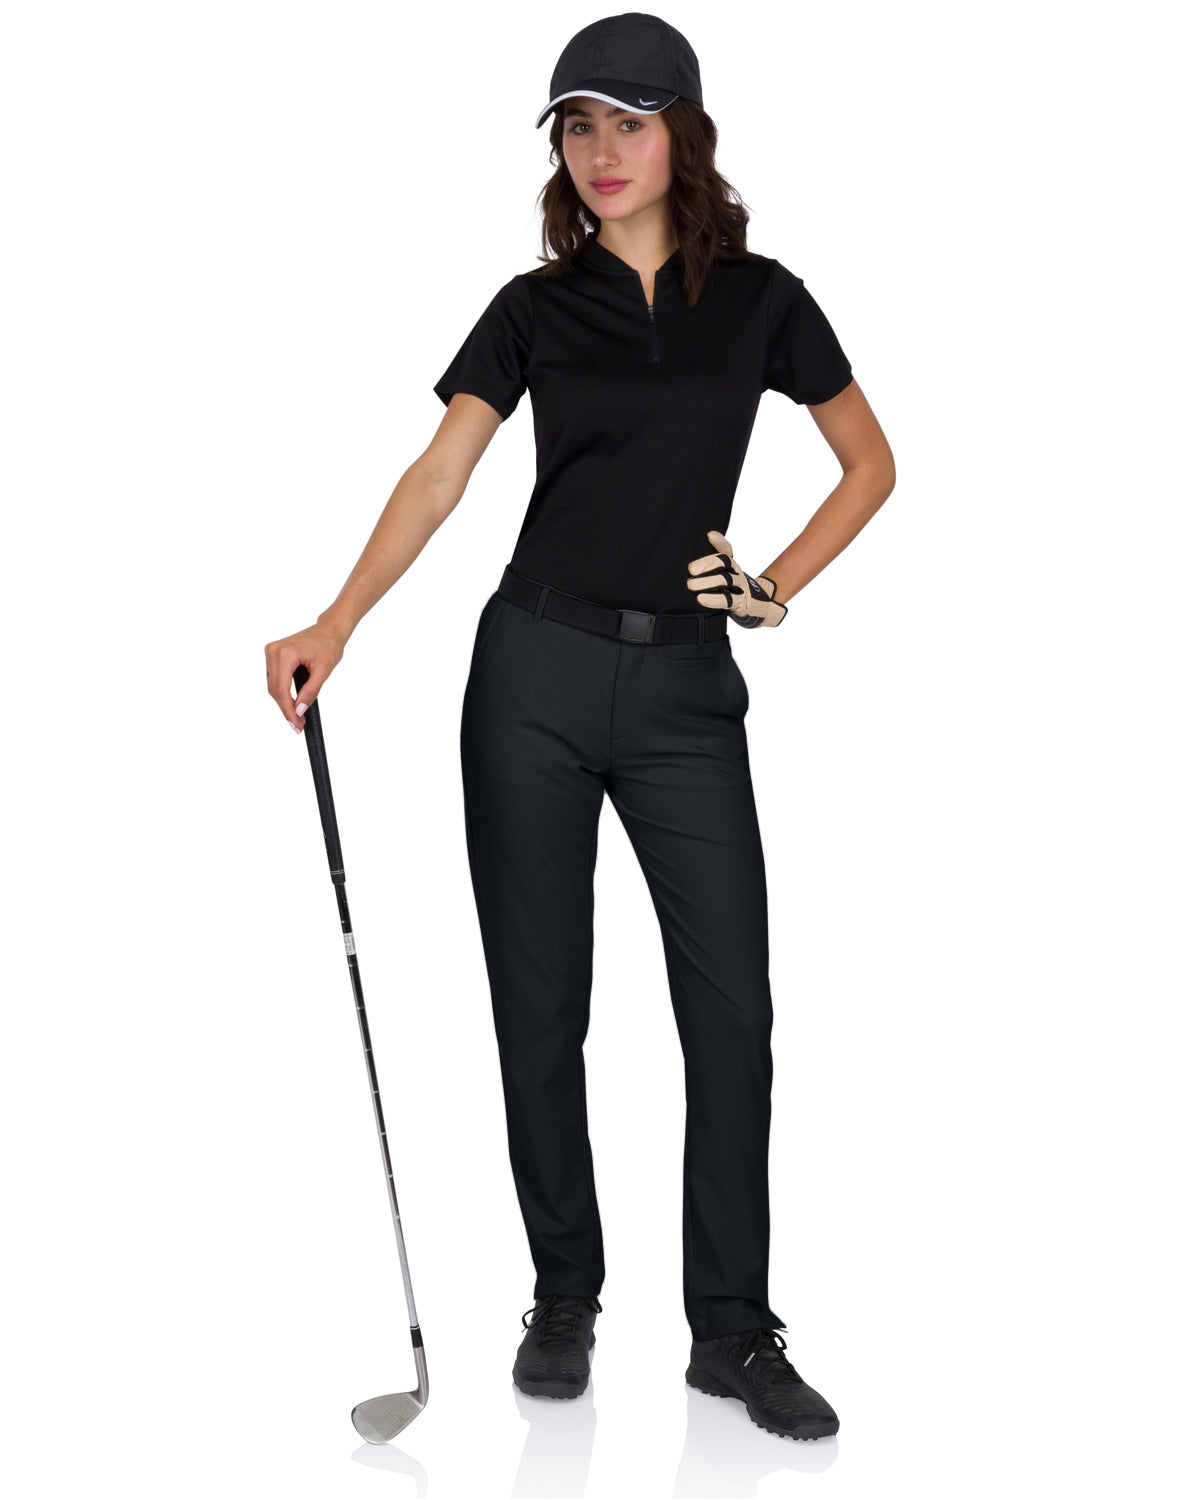 Women's Quick Dry Golf Pants - Lightweight w/ 4-Way Stretch Fabric. Mo